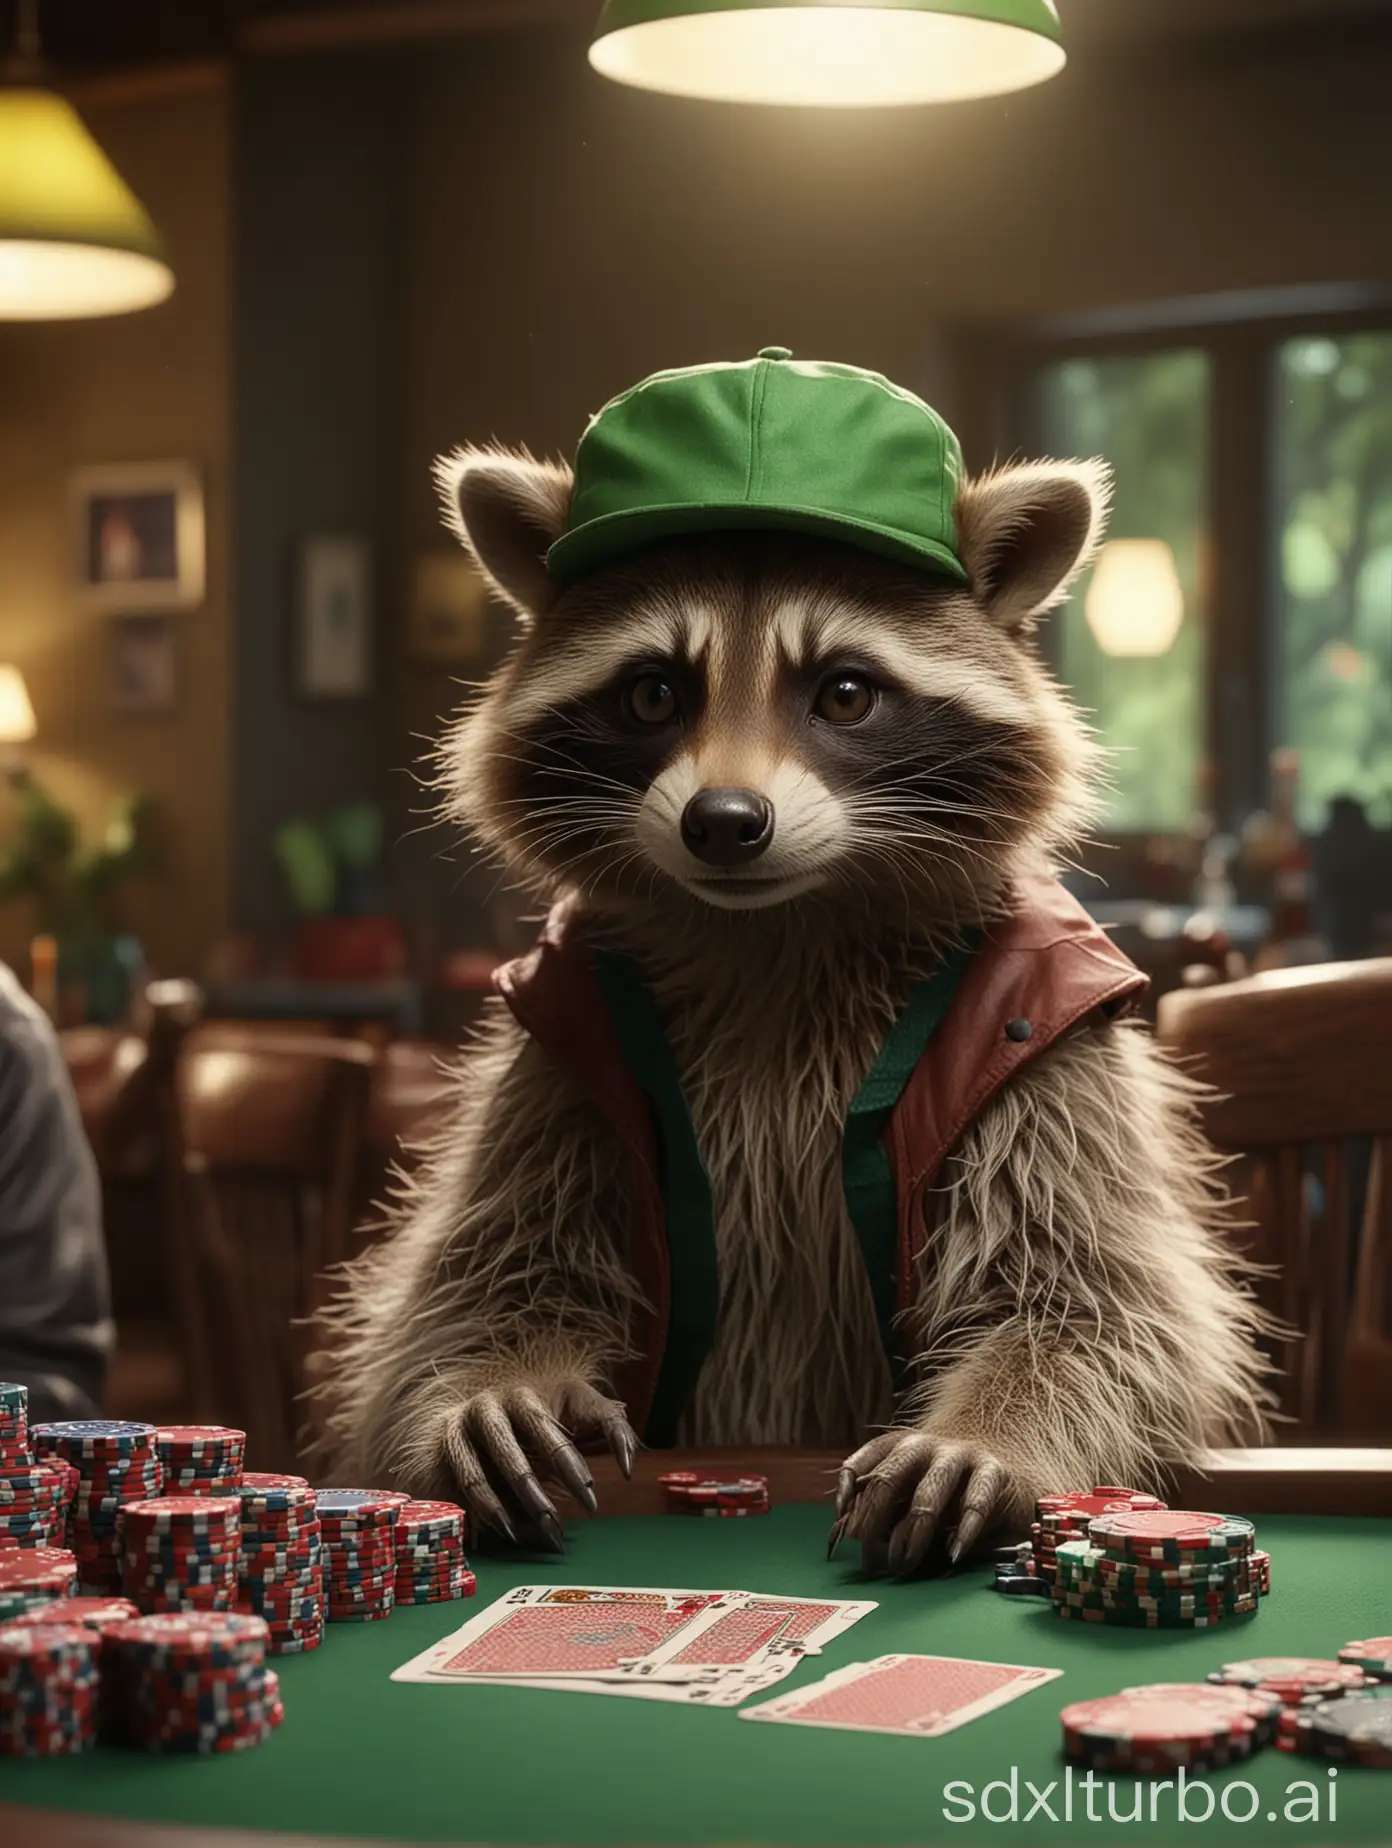 Raccoon-in-Green-Visor-Poker-Hat-Playing-Poker